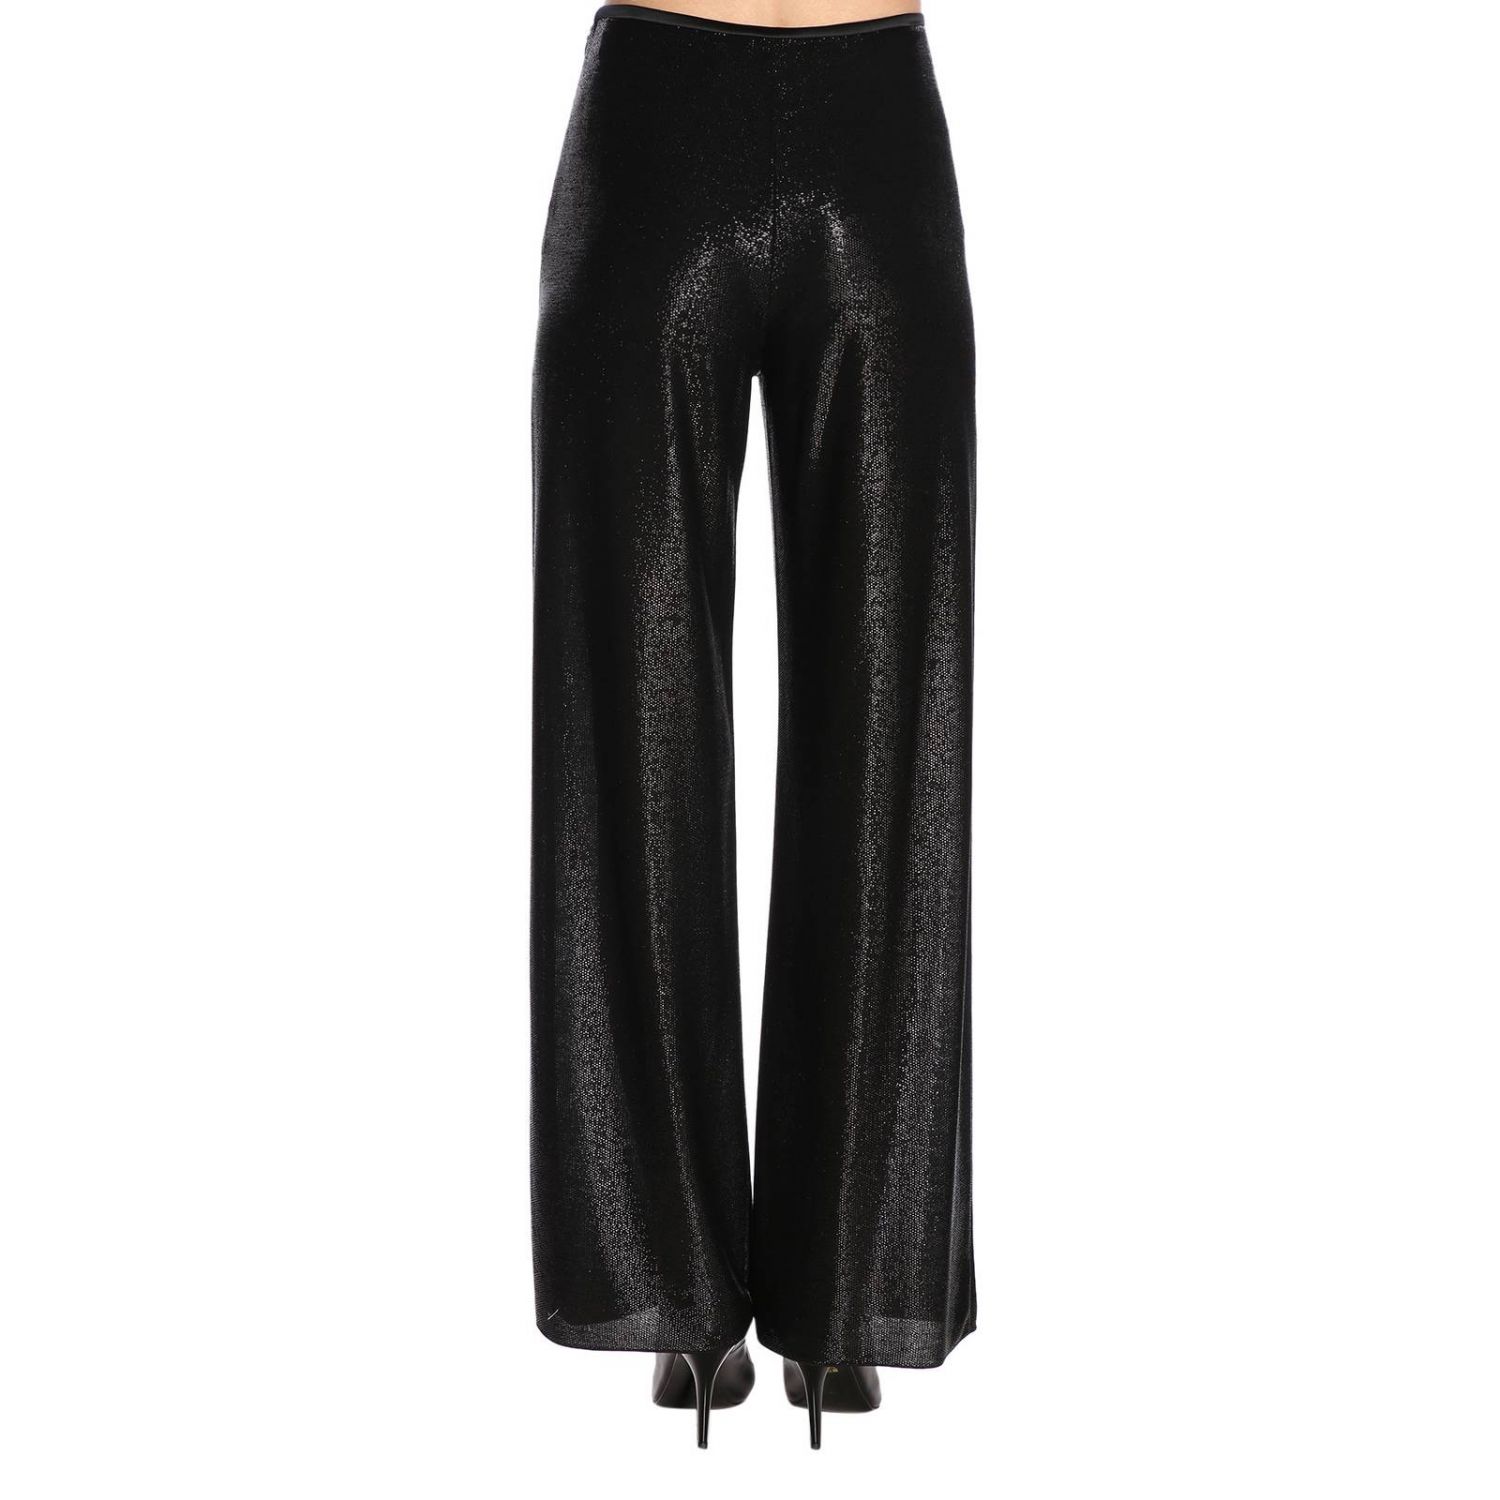 Emporio Armani Outlet: pants for woman - Black | Emporio Armani pants ...